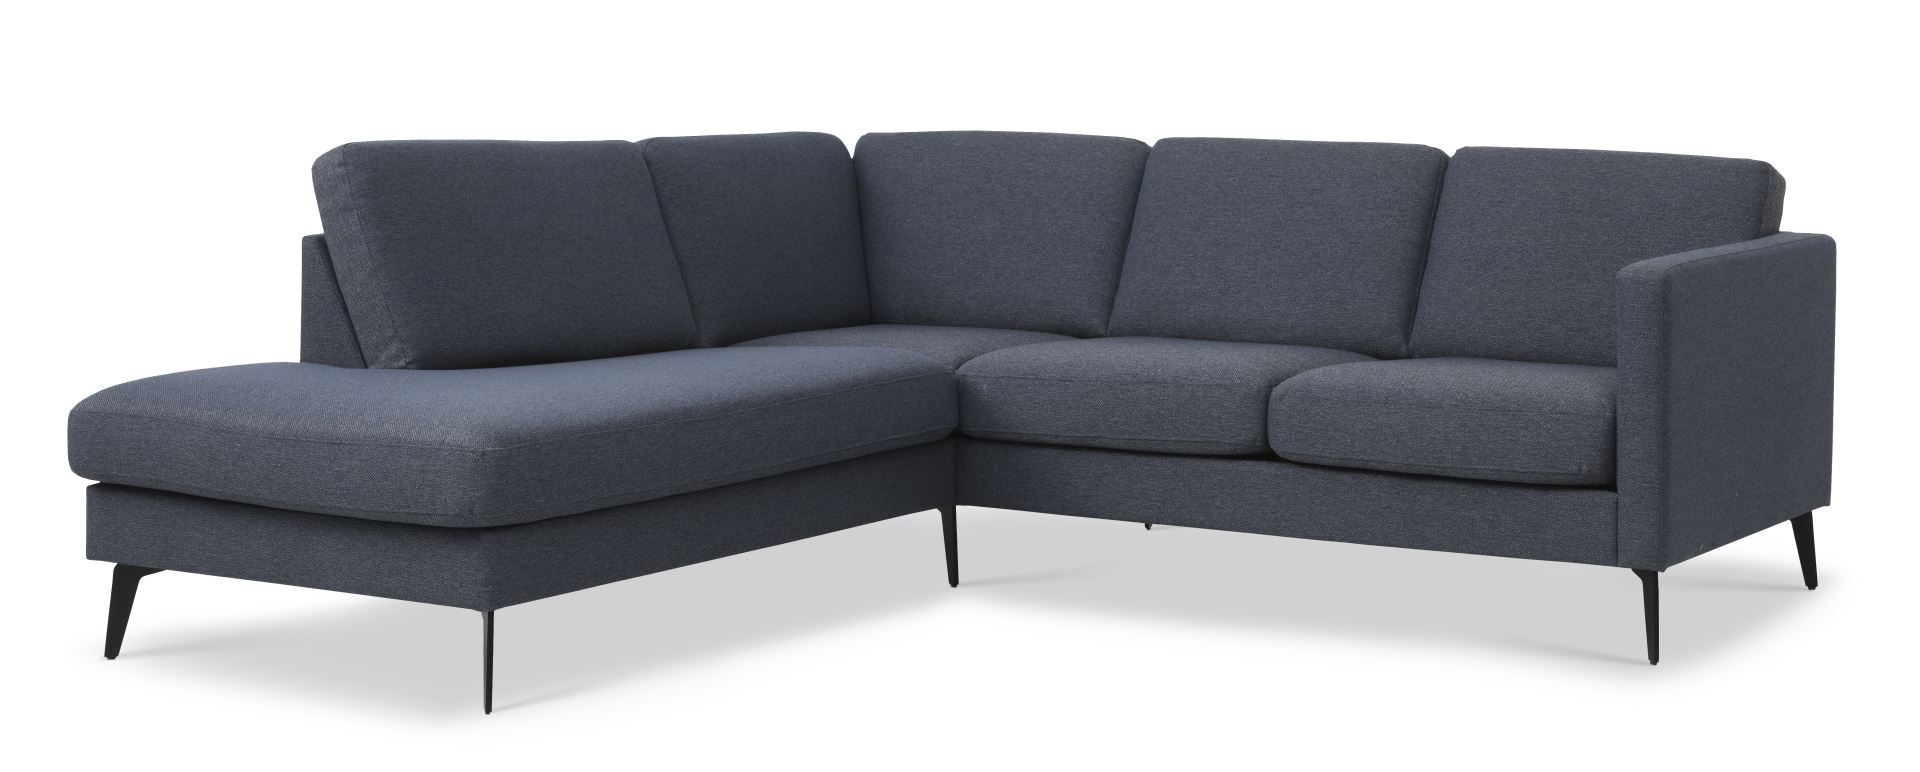 Ask sæt 52 lille OE sofa, m. venstre chaiselong - navy blå polyester stof og Eiffel ben